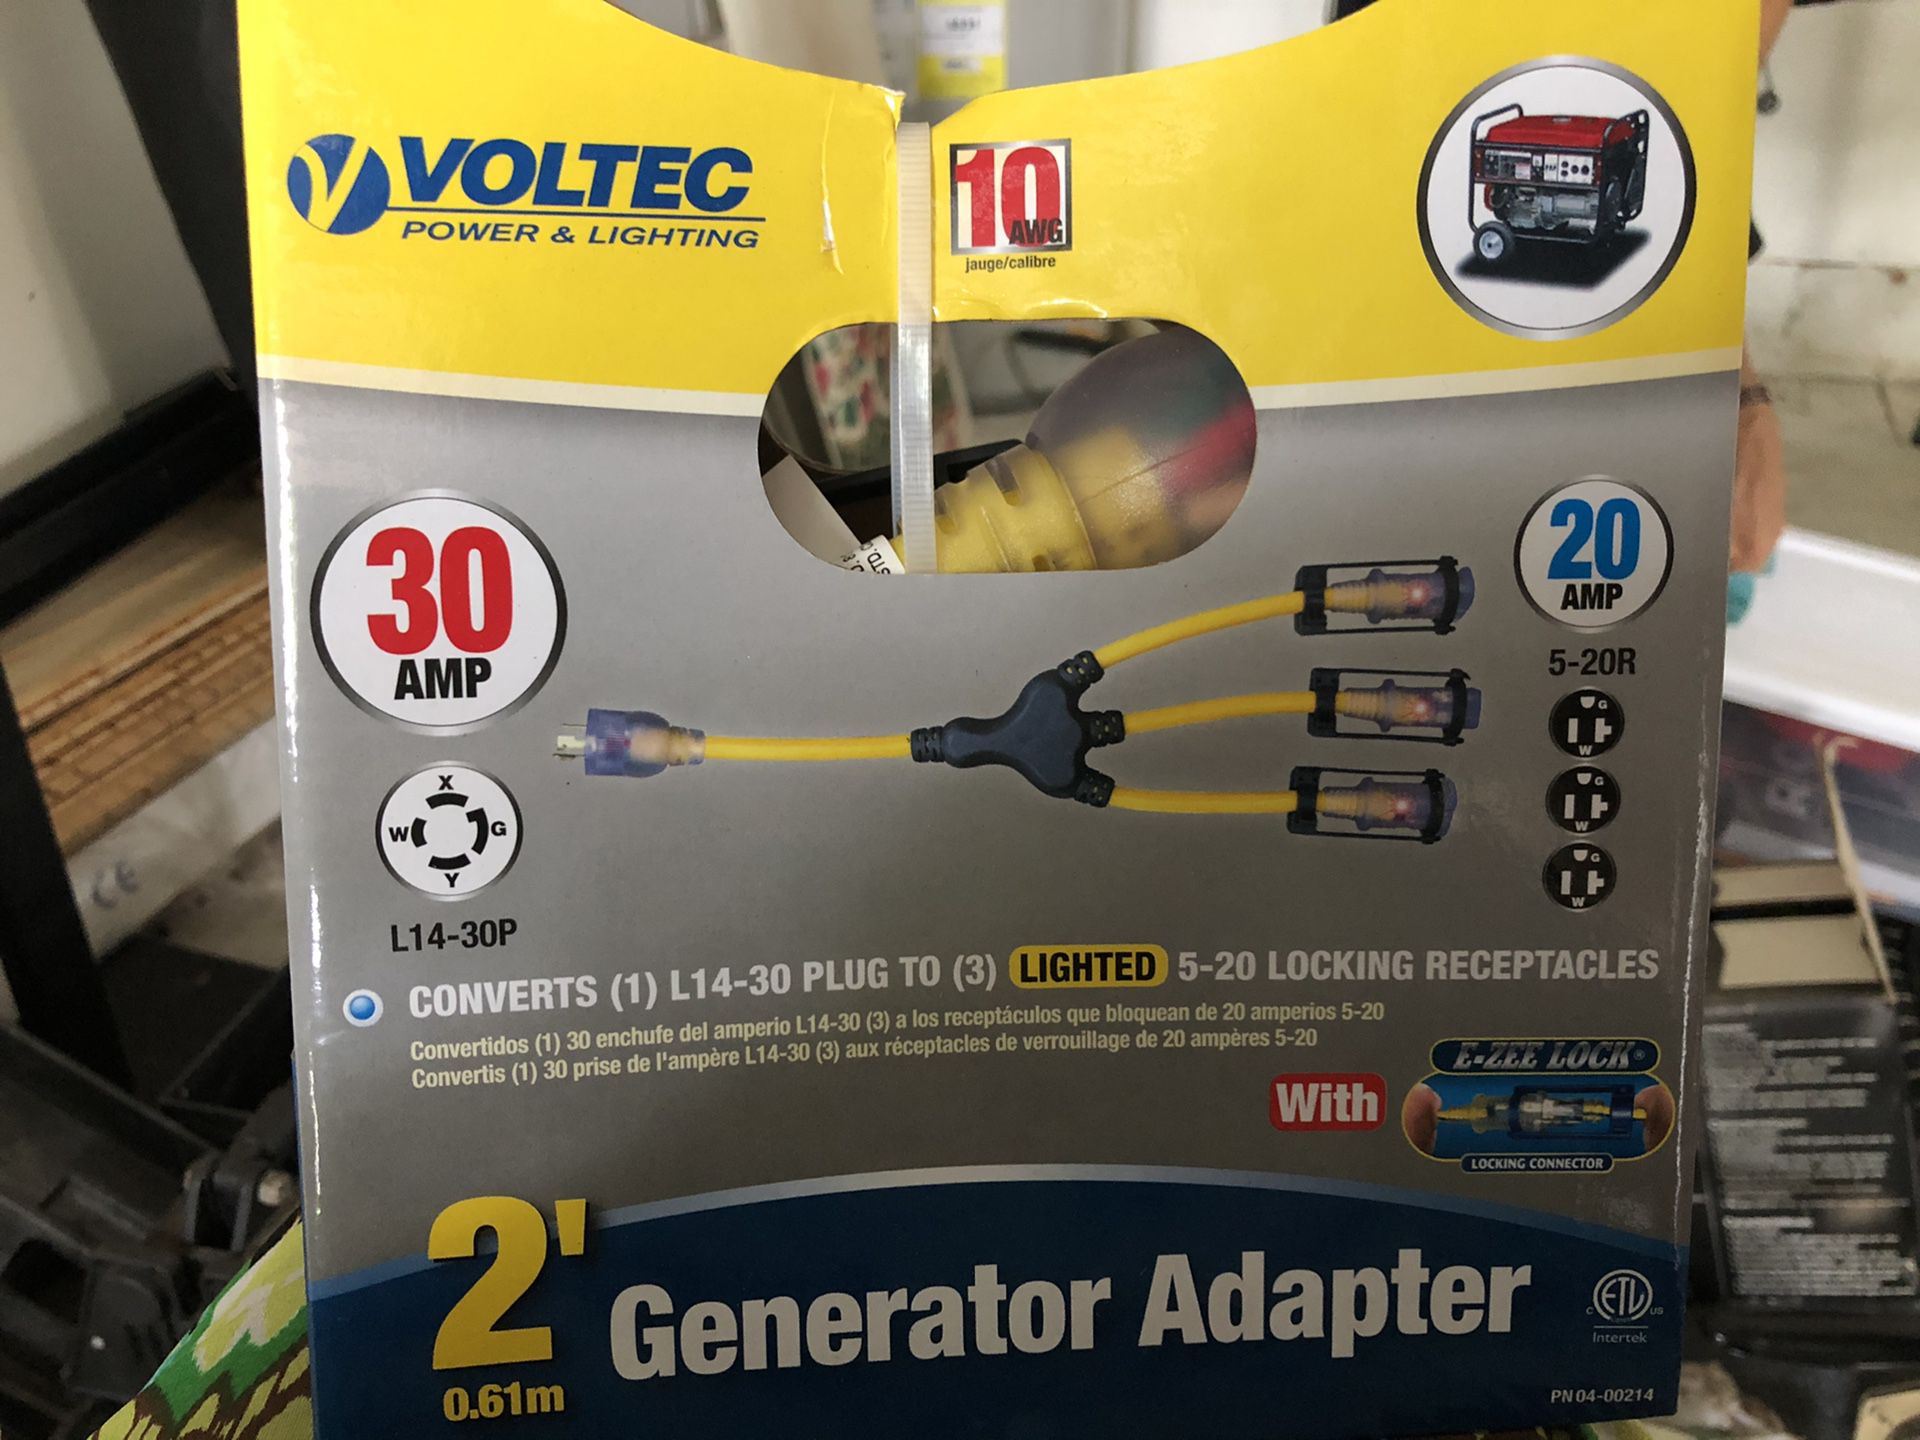 Voltec generator adapter